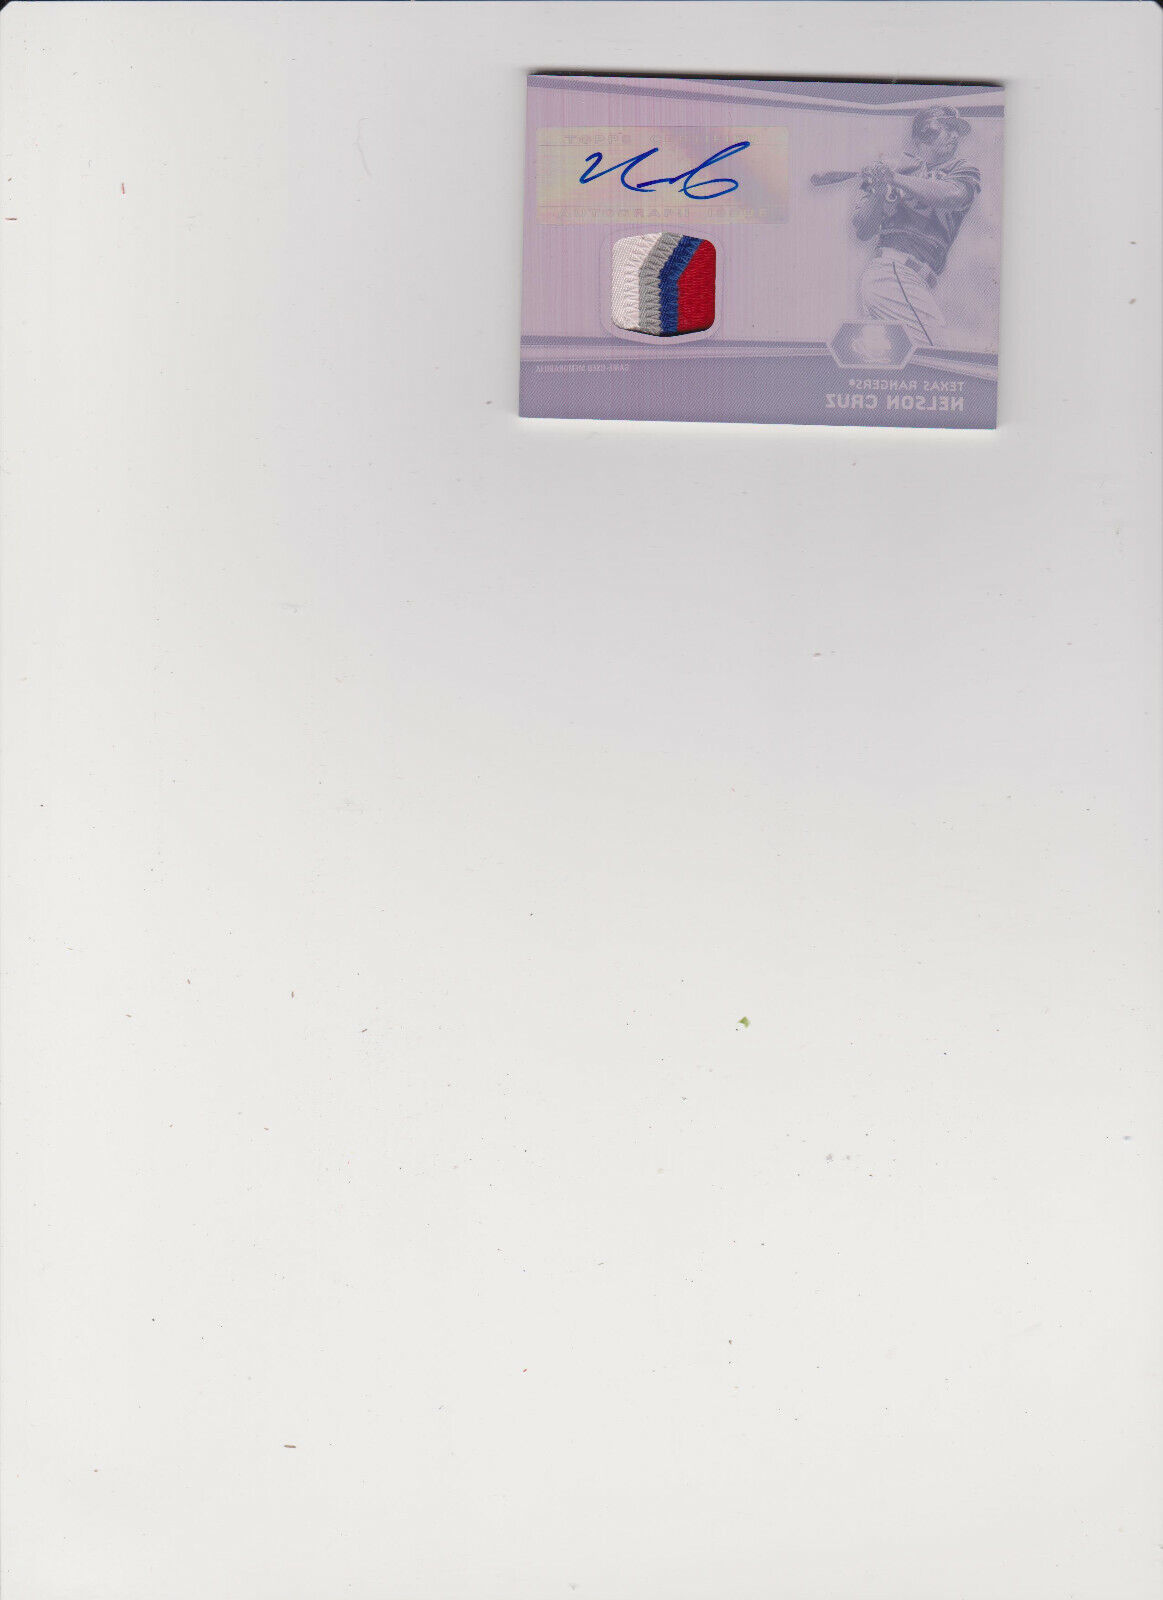 2012 Bowman Platinum Nelson Cruz Press Plate Auto Relic Card #AR-NC #\'d 1/1